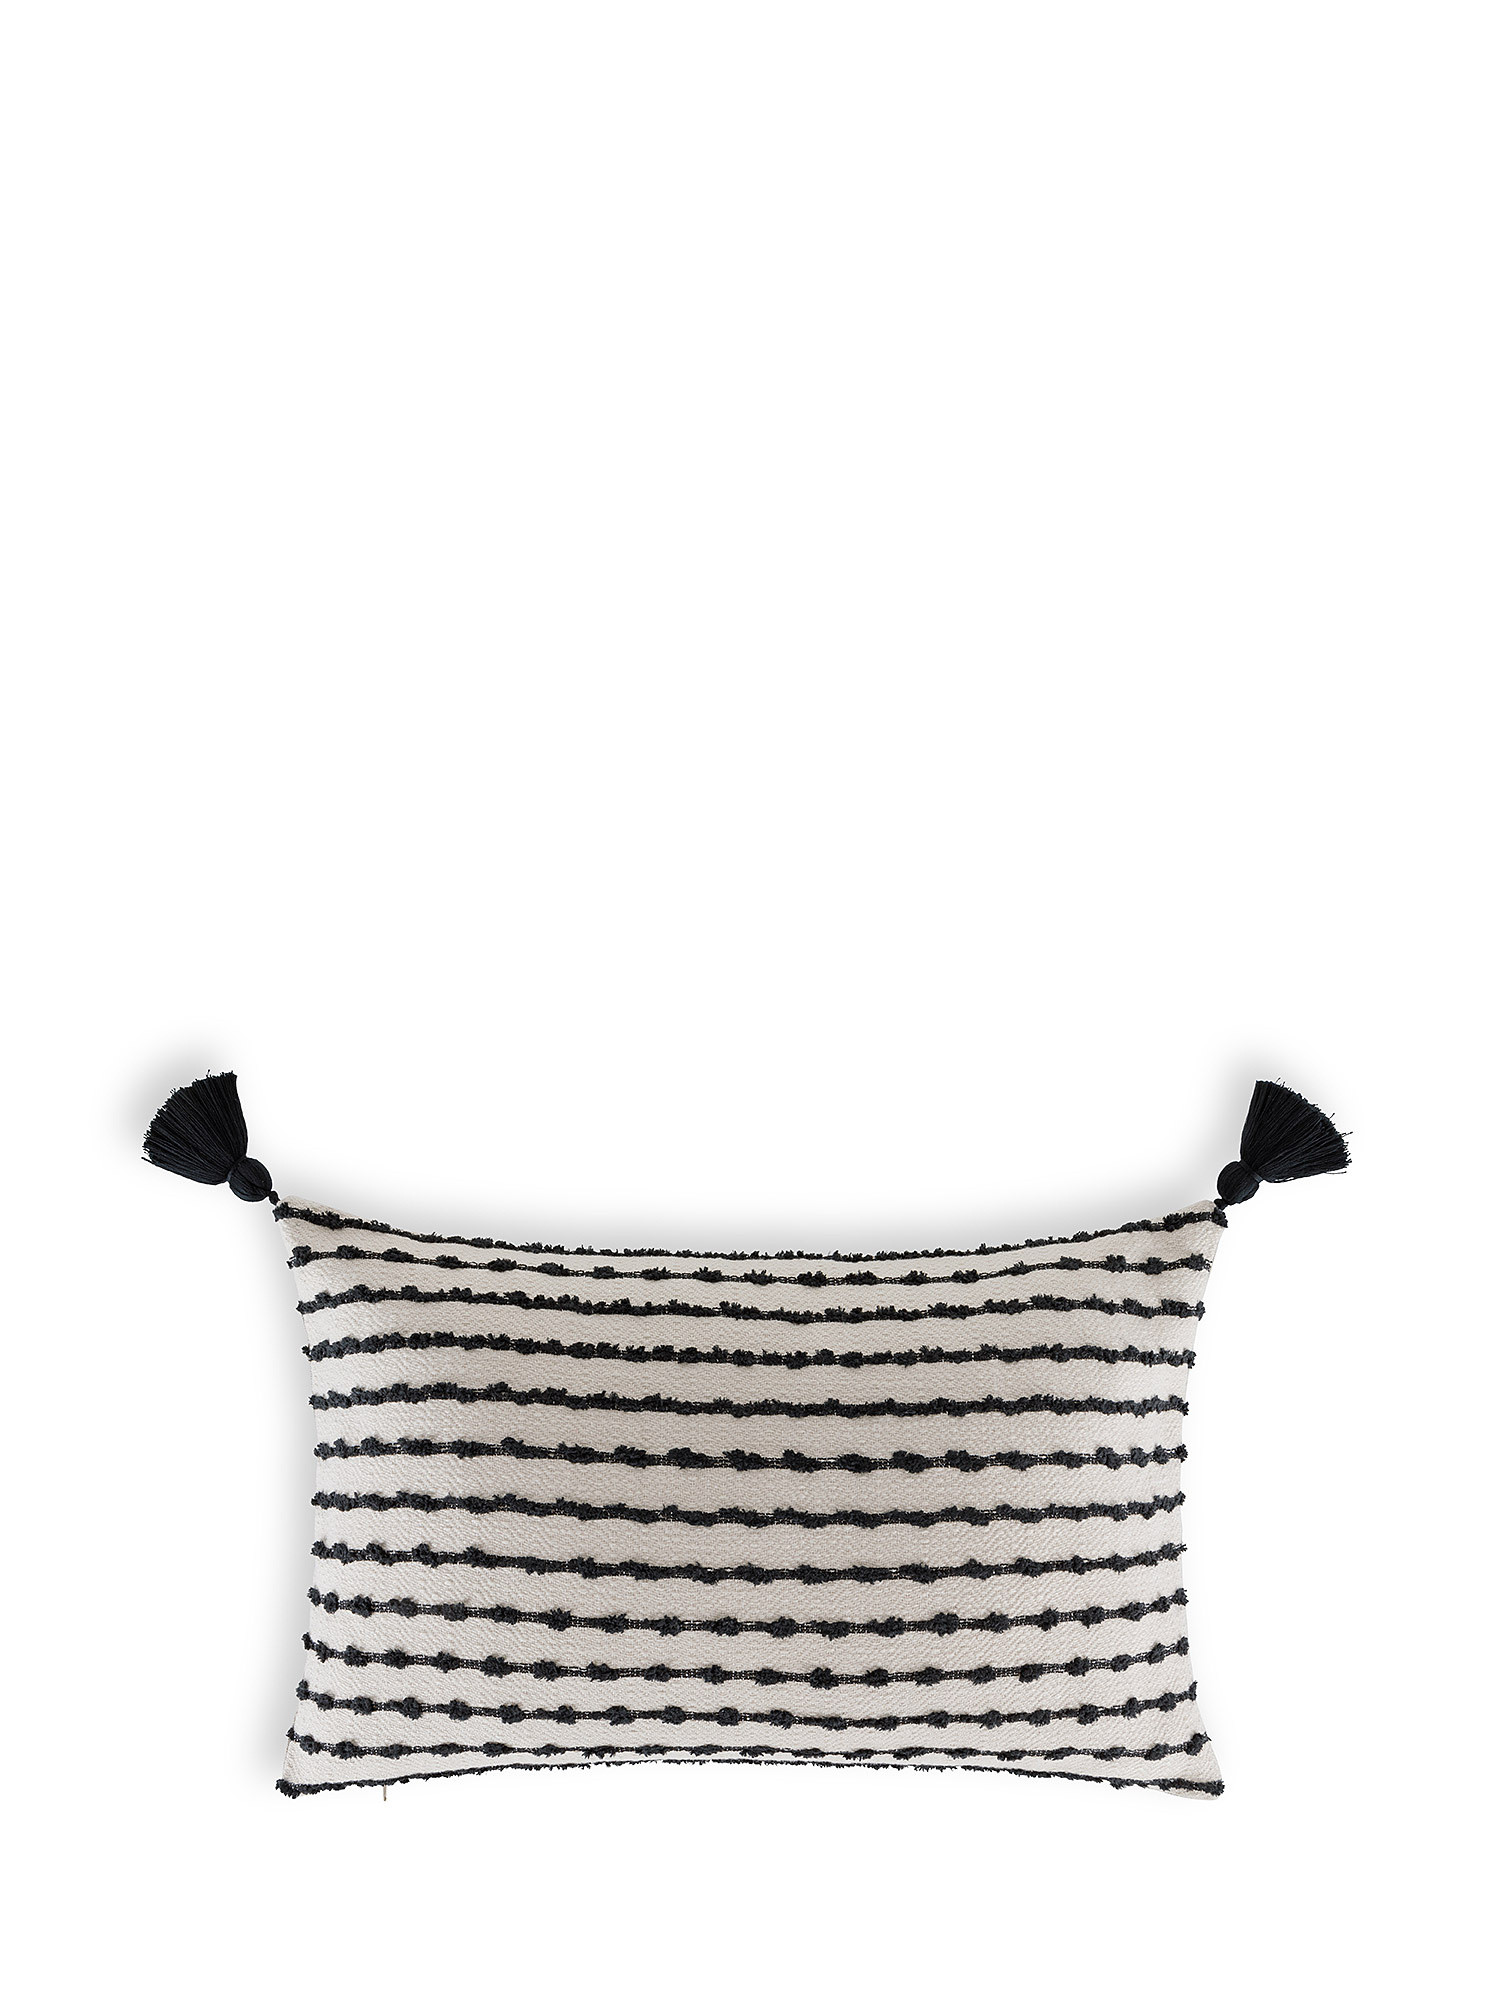 Striped jacquard cushion with tassel 35x55cm, Black, large image number 0